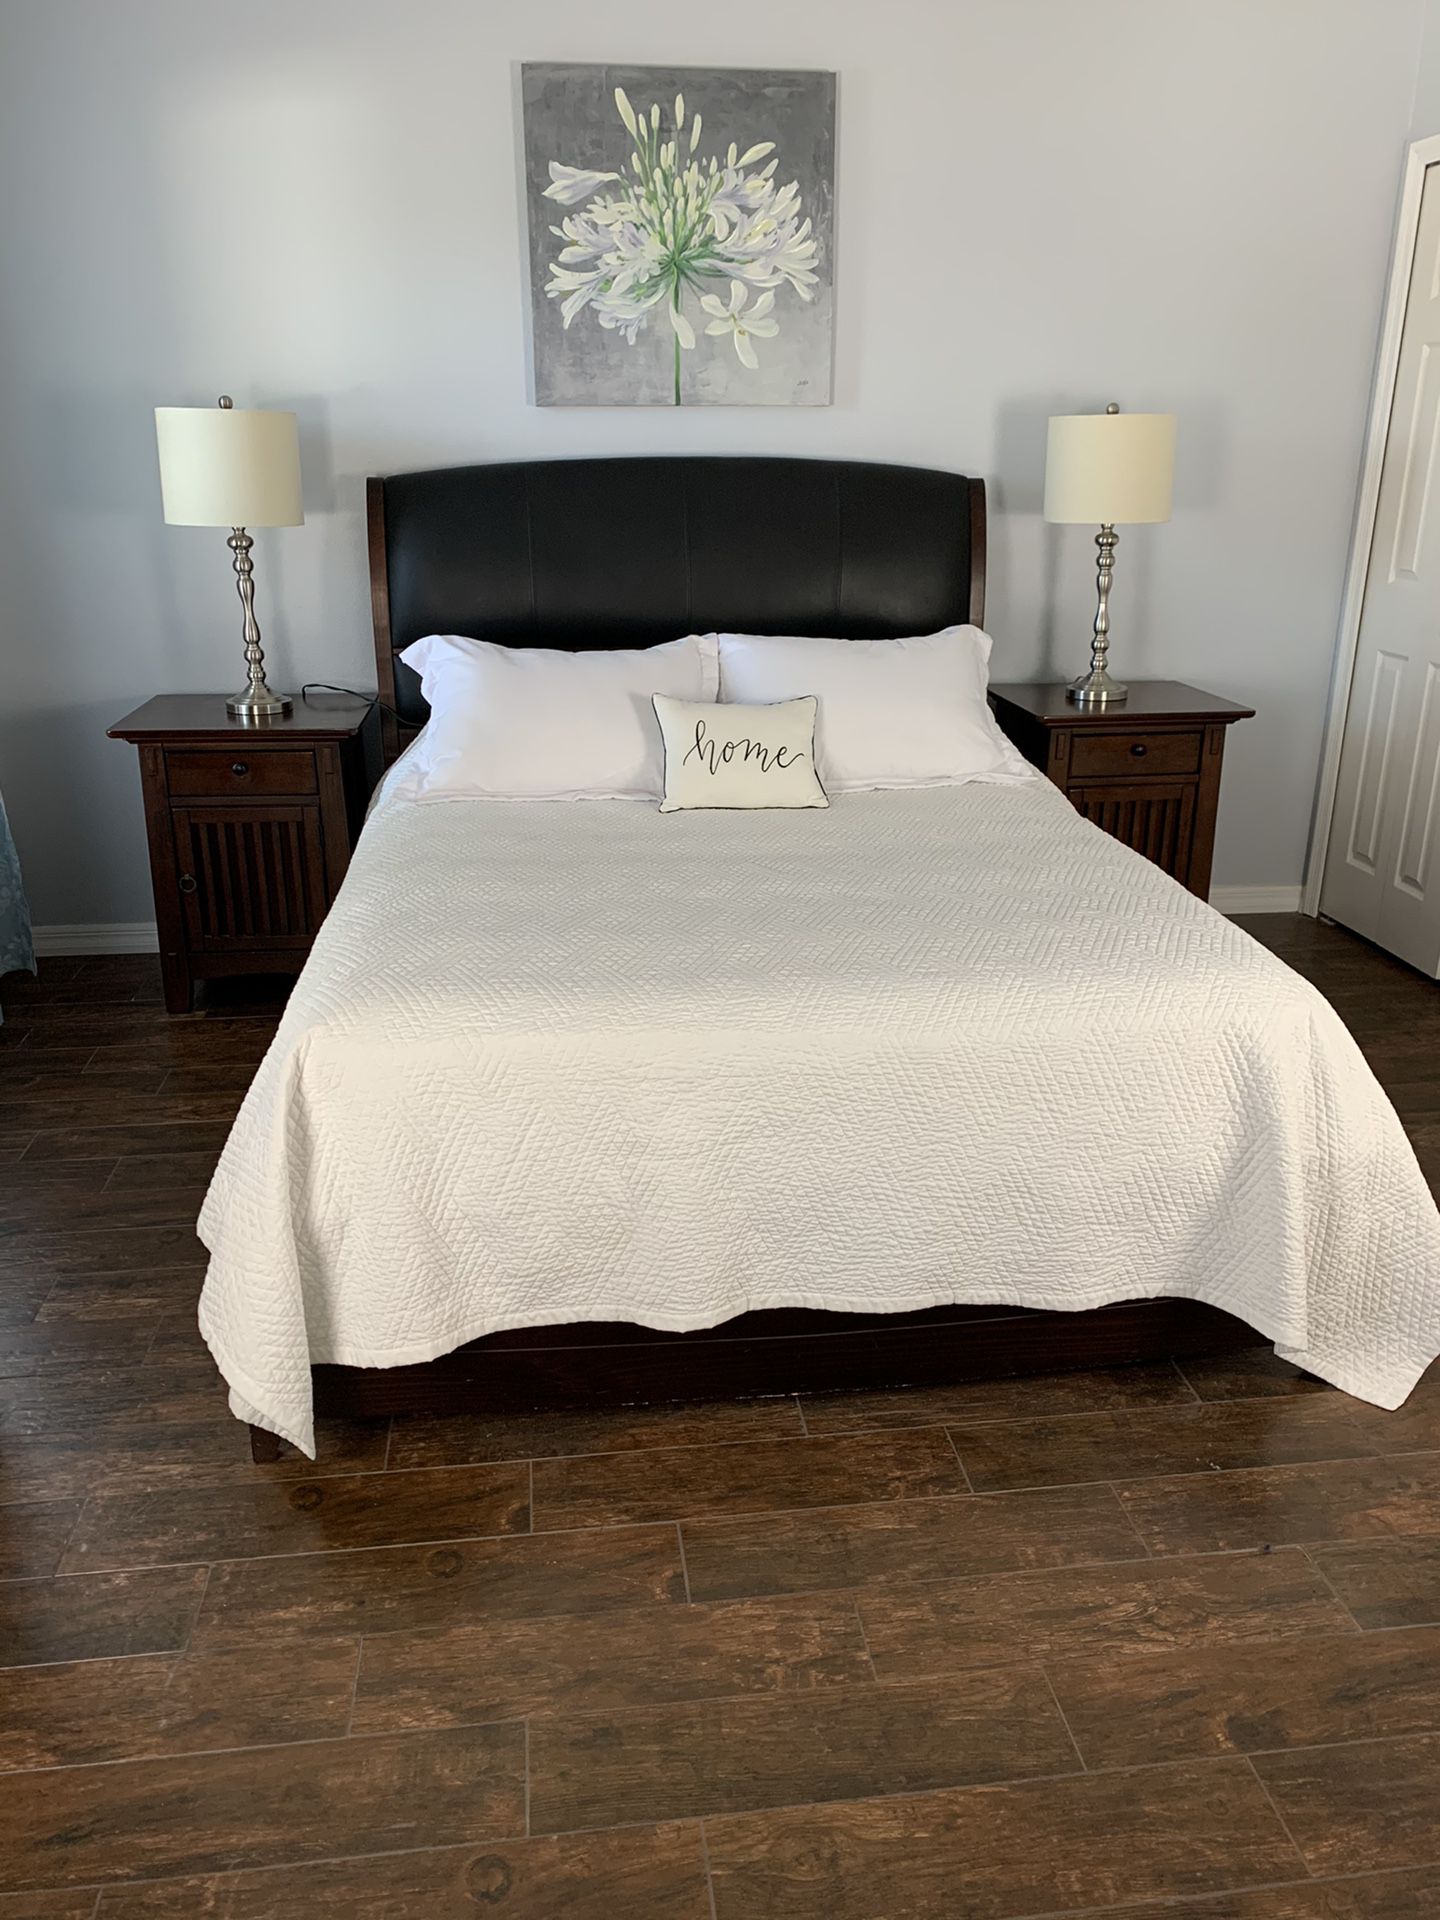 Queen bedroom set from American Signature Furniture